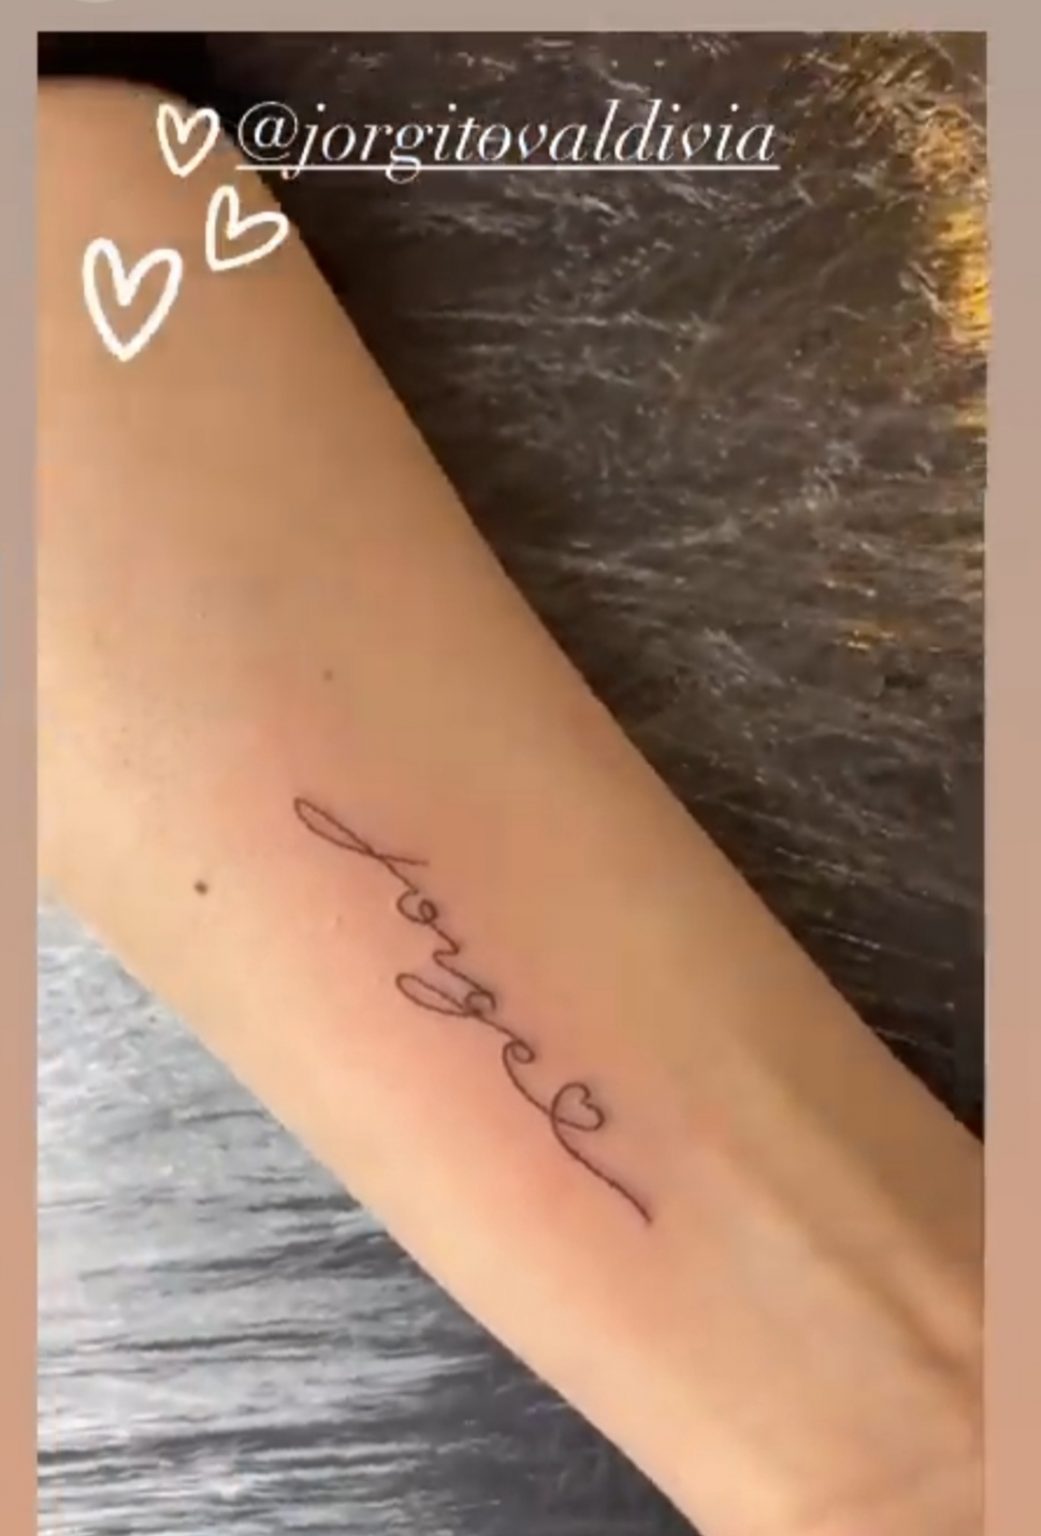 Daniela Aránguiz tatuándose